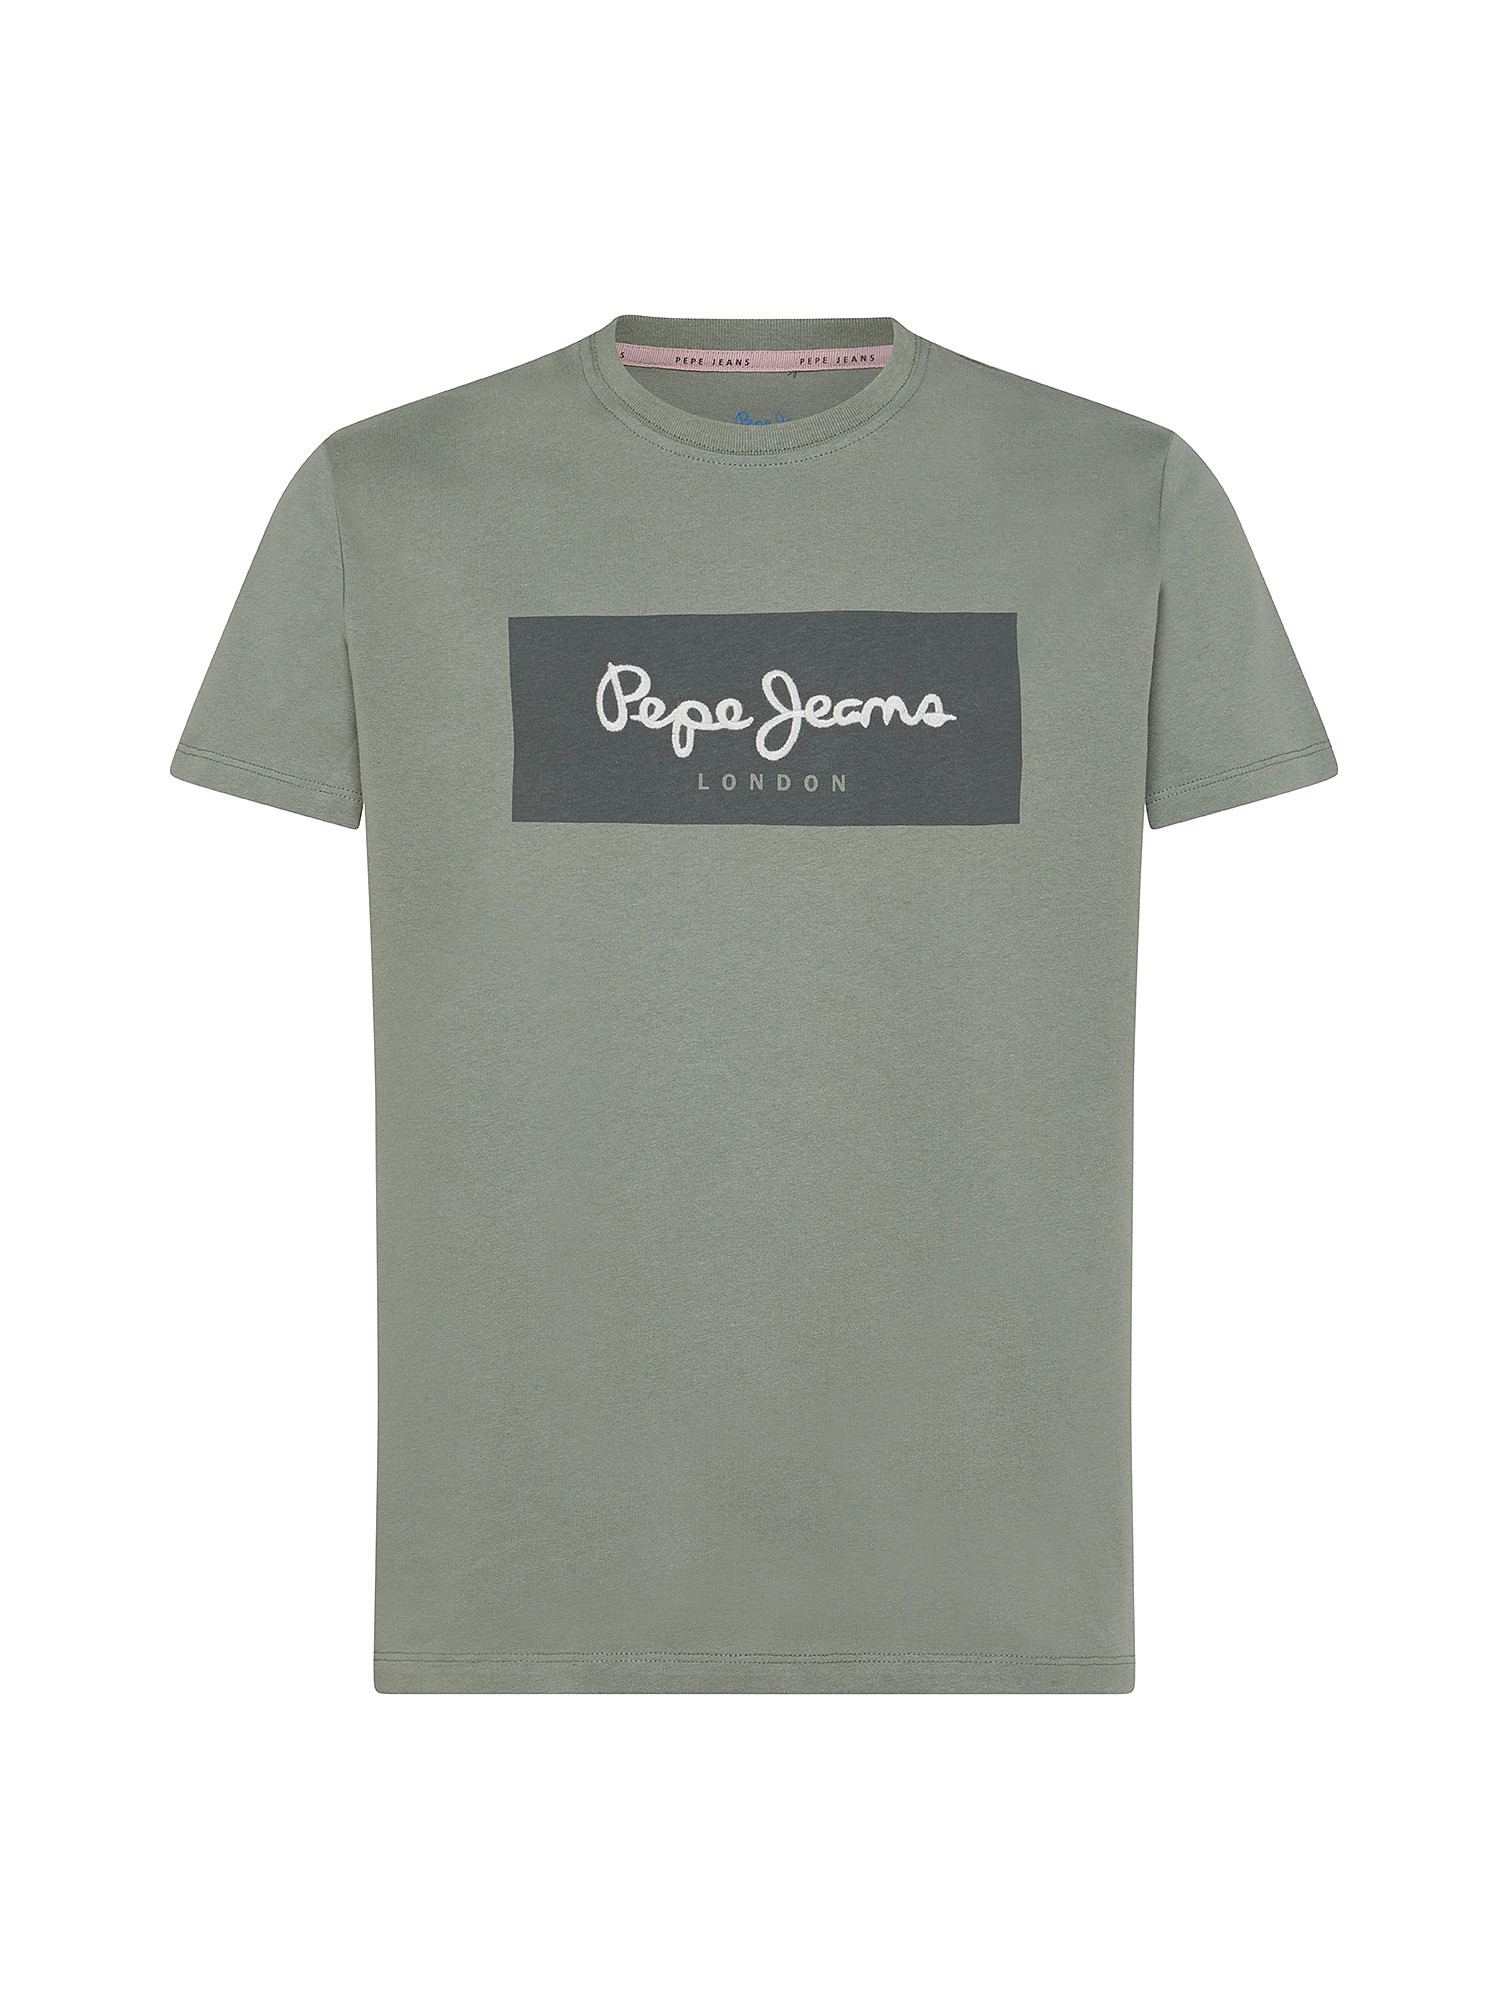 Pepe Jeans - Cotton logo T-shirt, Light Green, large image number 0